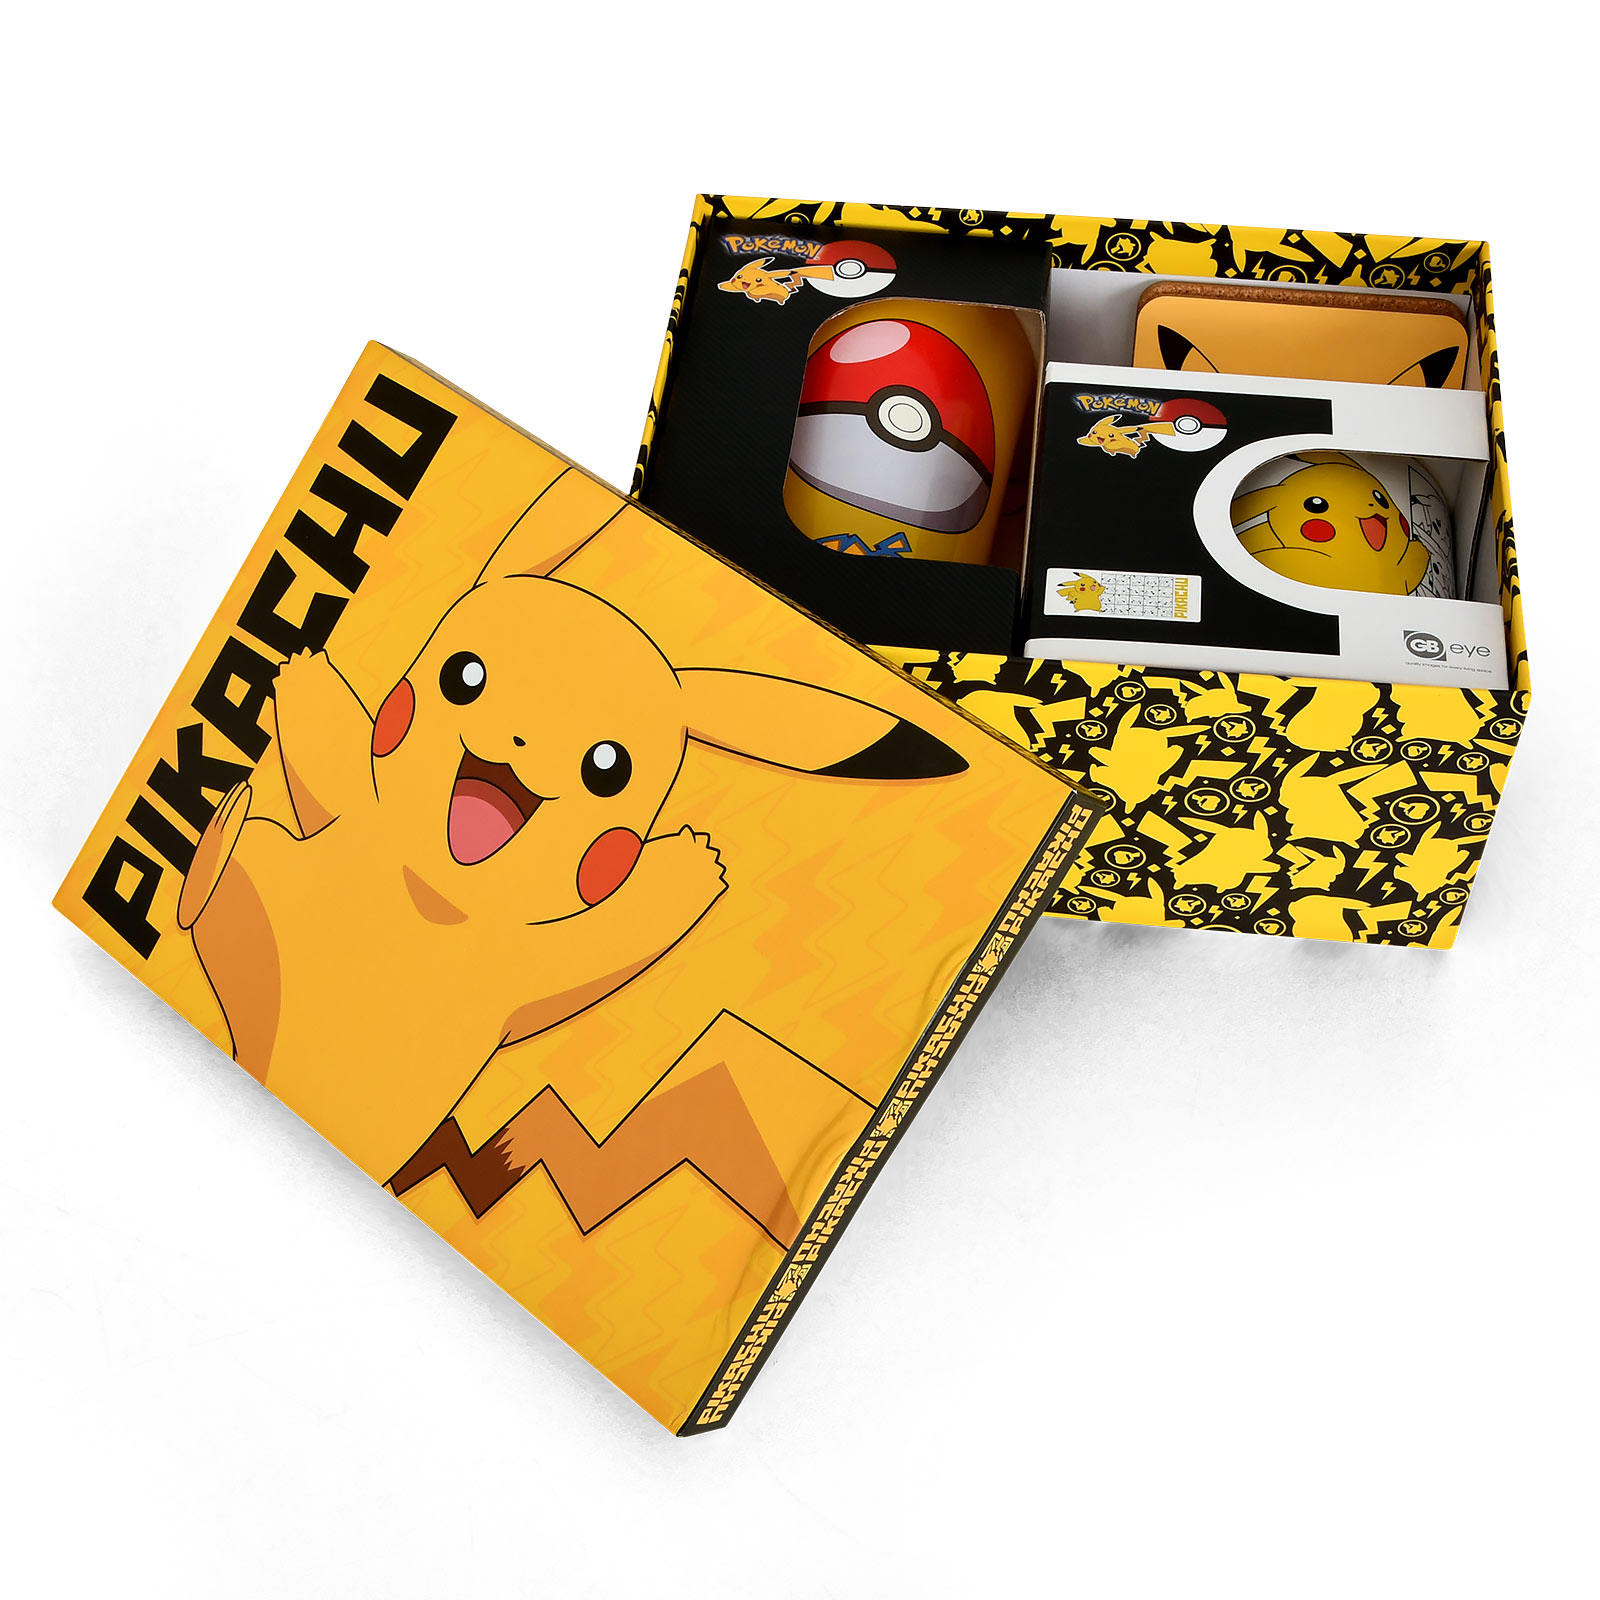 Pokemon - Pikachu Gift Set